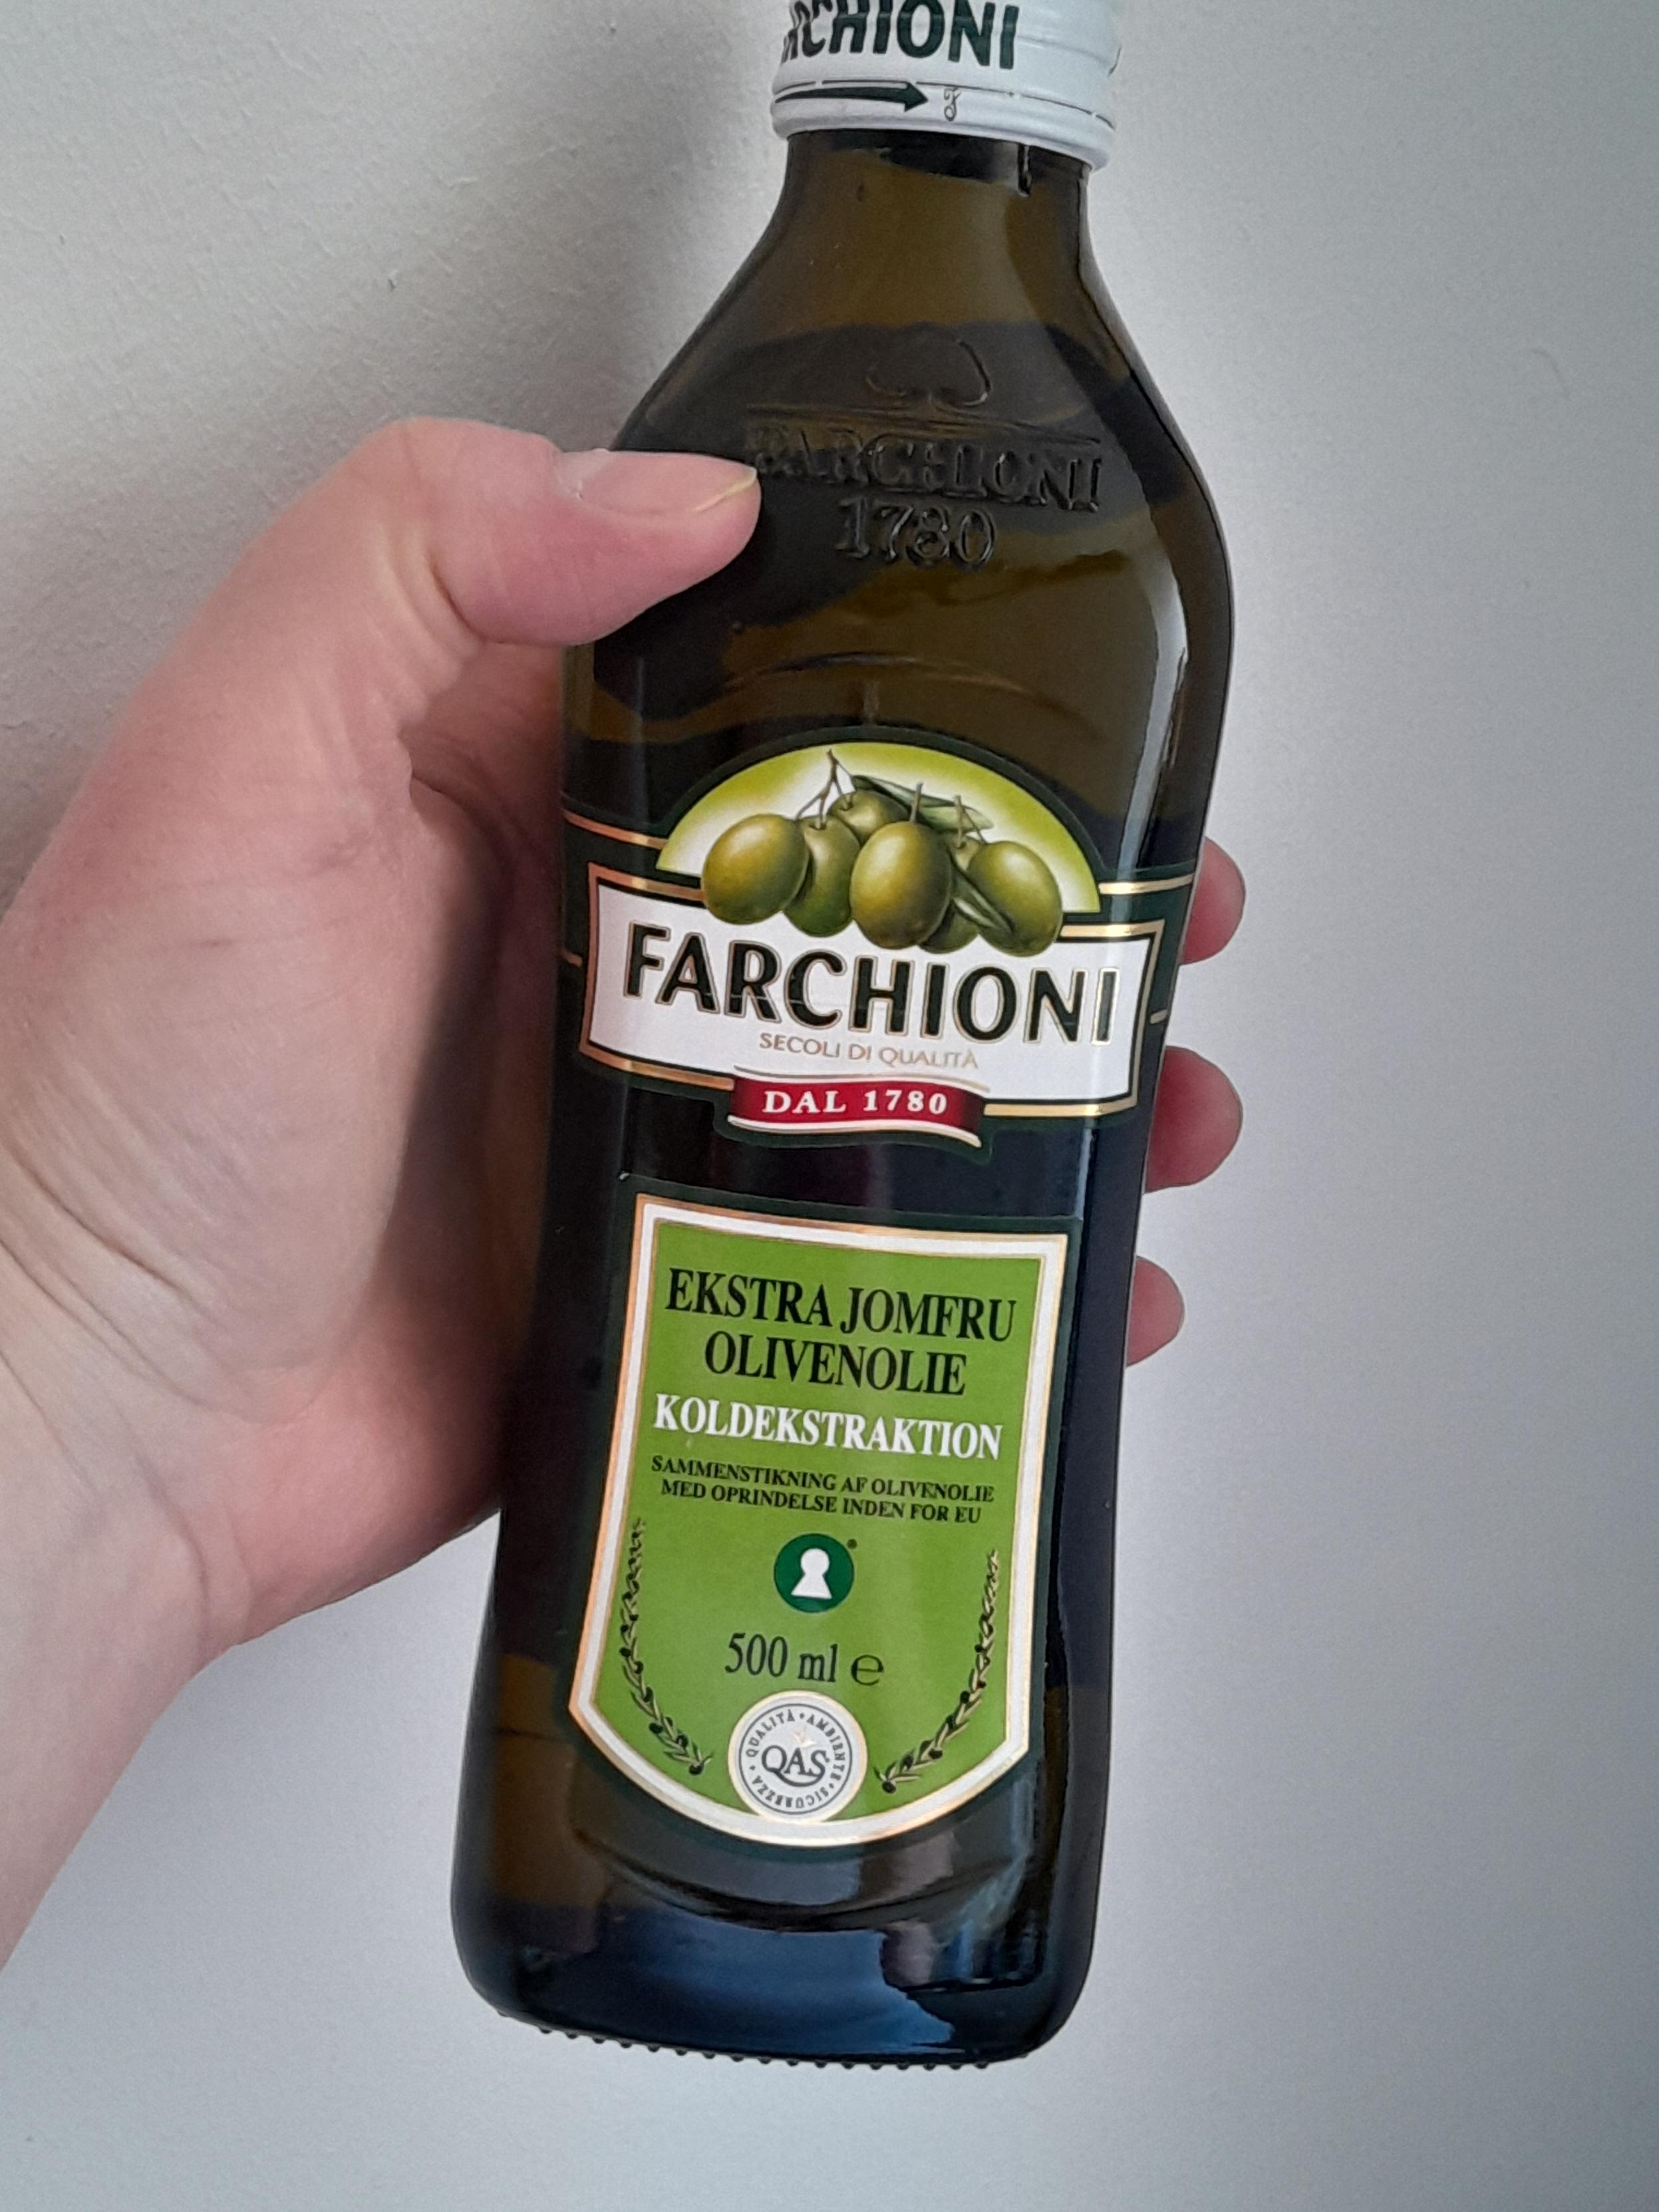 Farchioni ekstra jomfru olivenolie